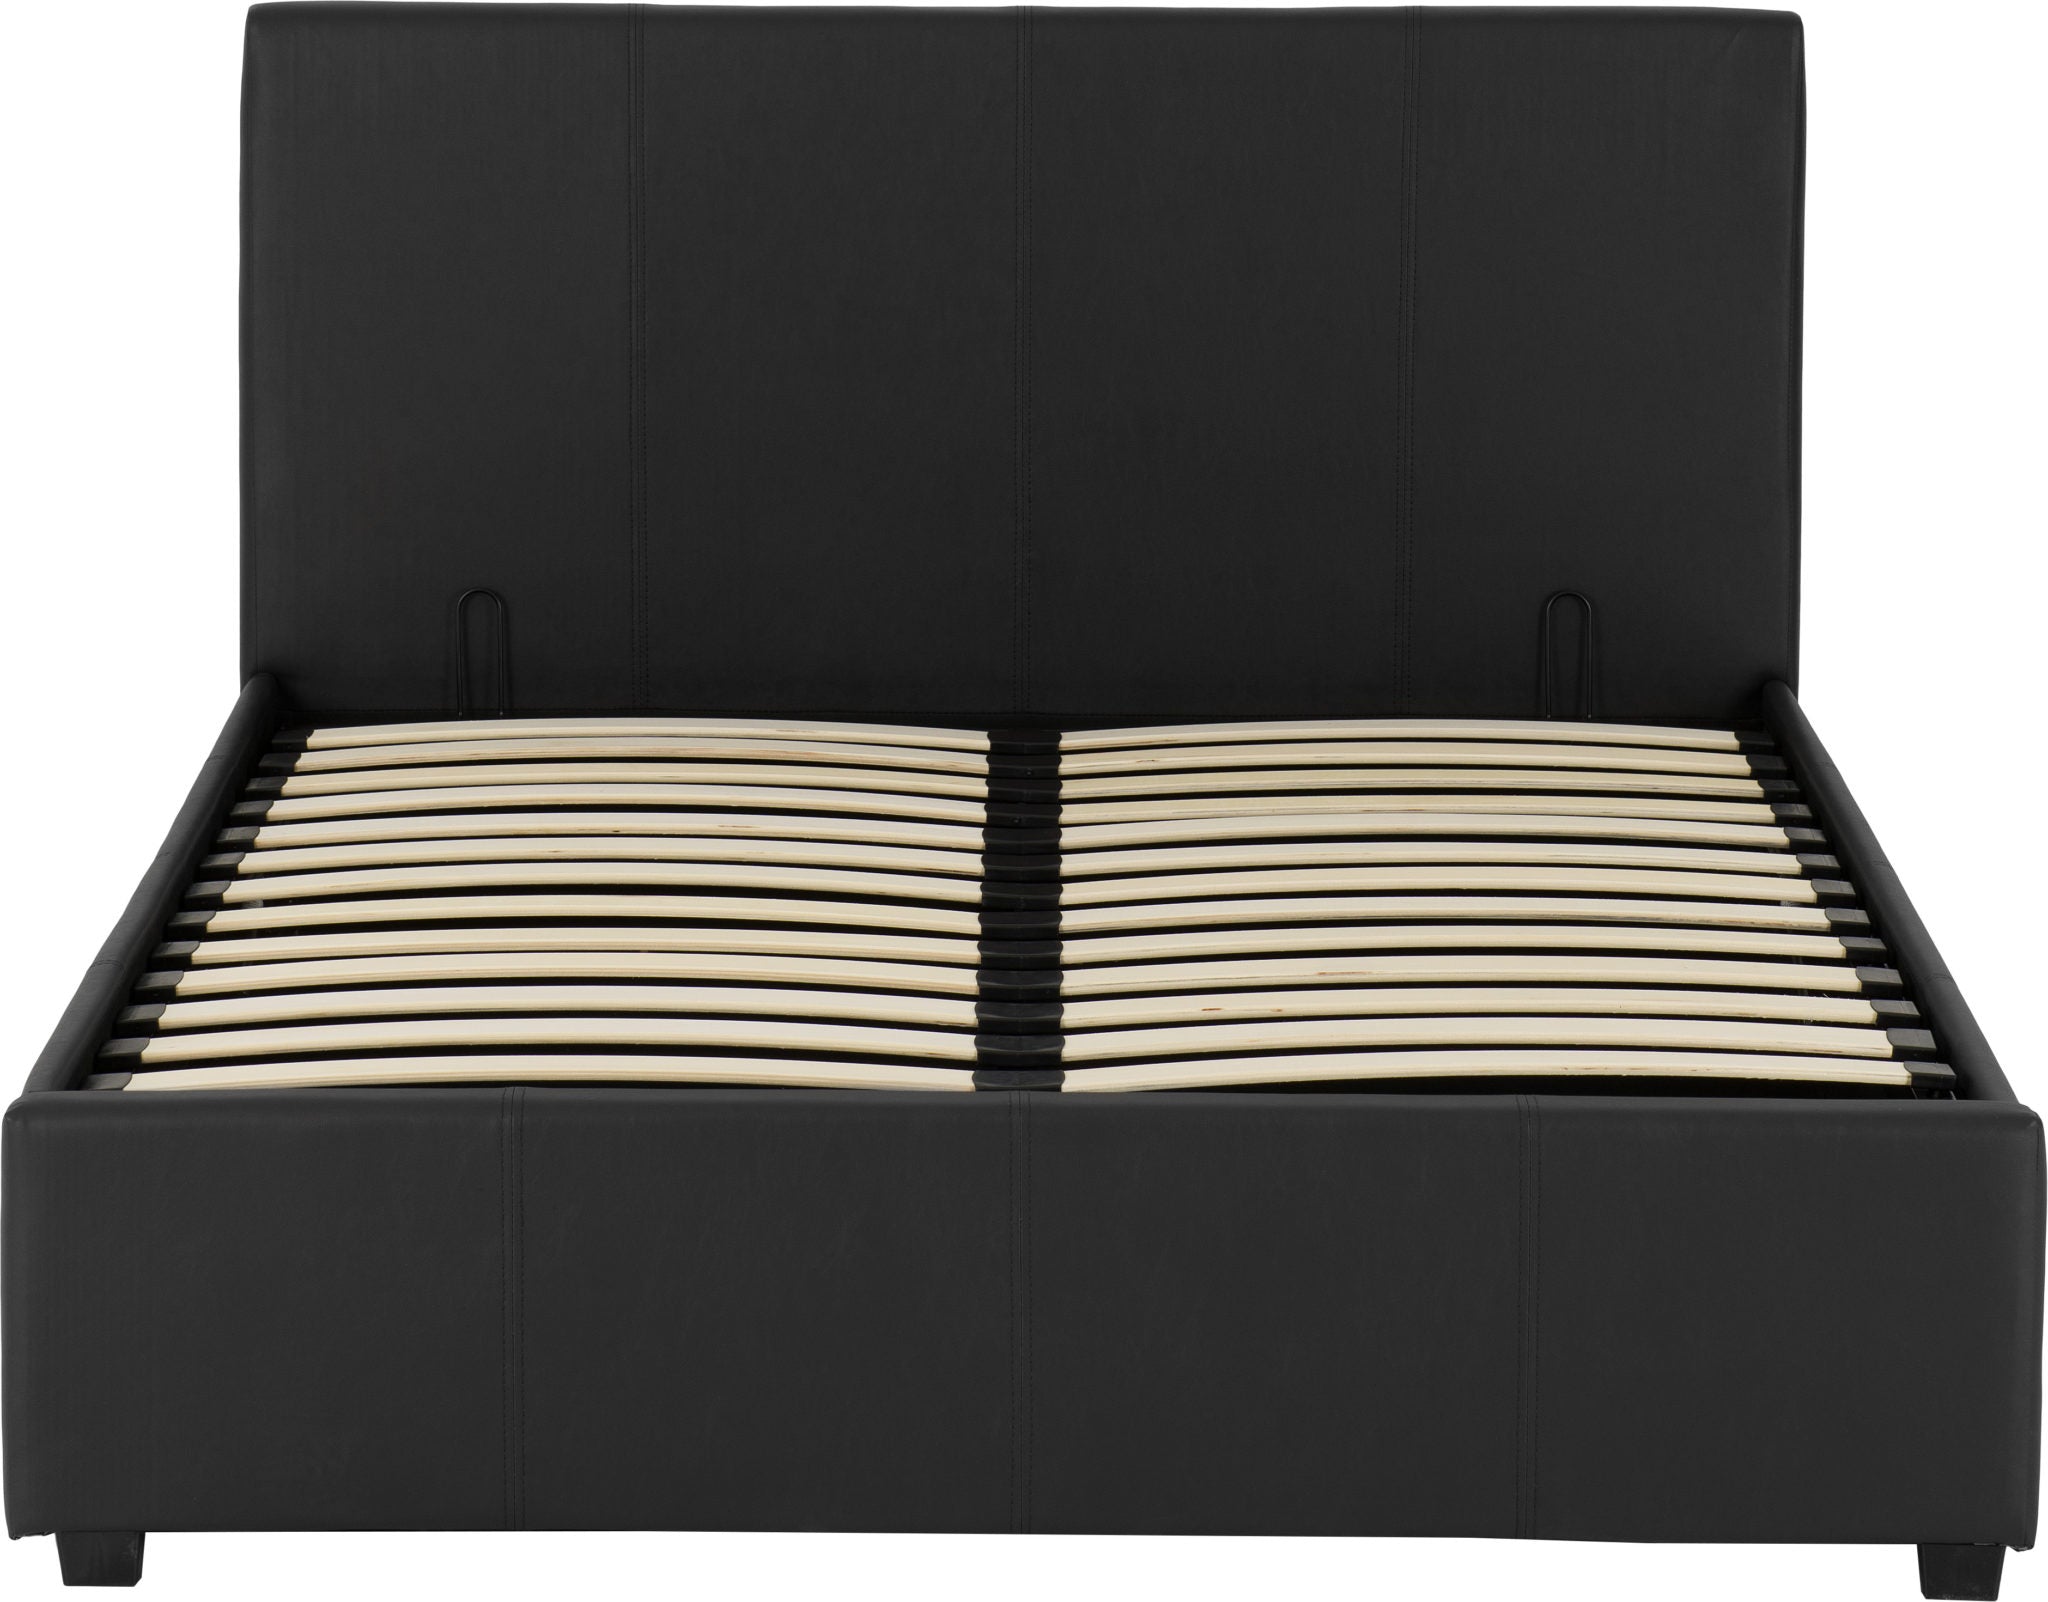 Prado Plus 4FT 6 Storage Bed Black Faux Leather